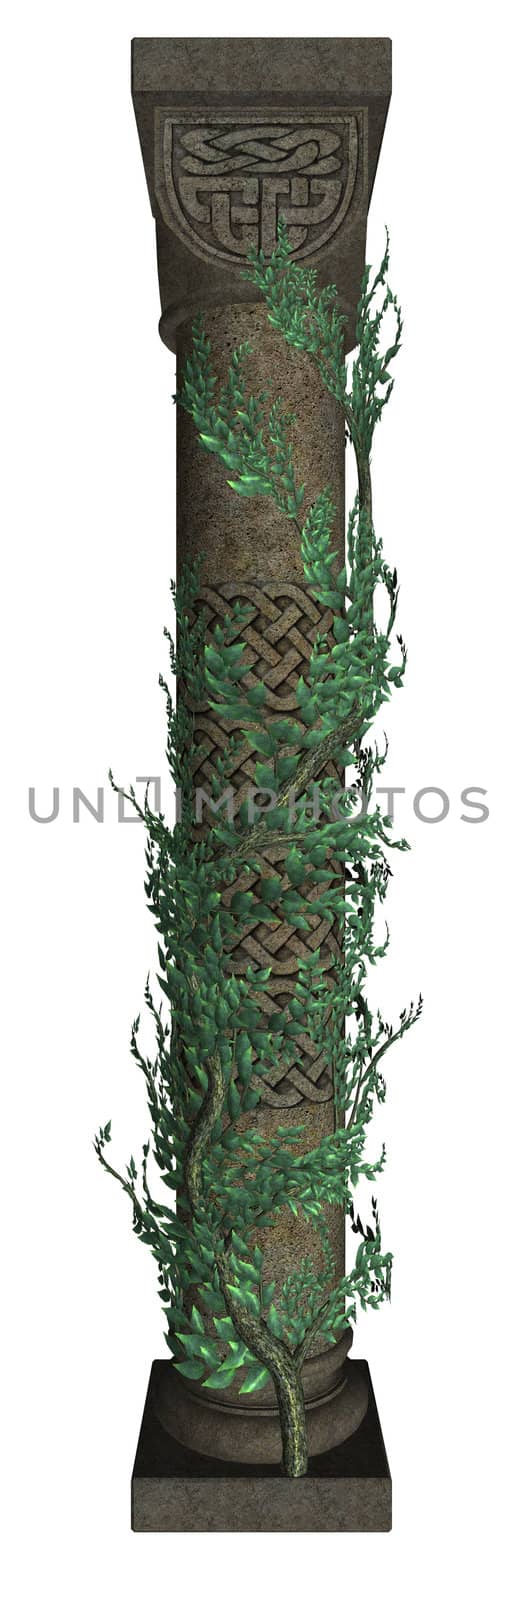 Singular column with vines